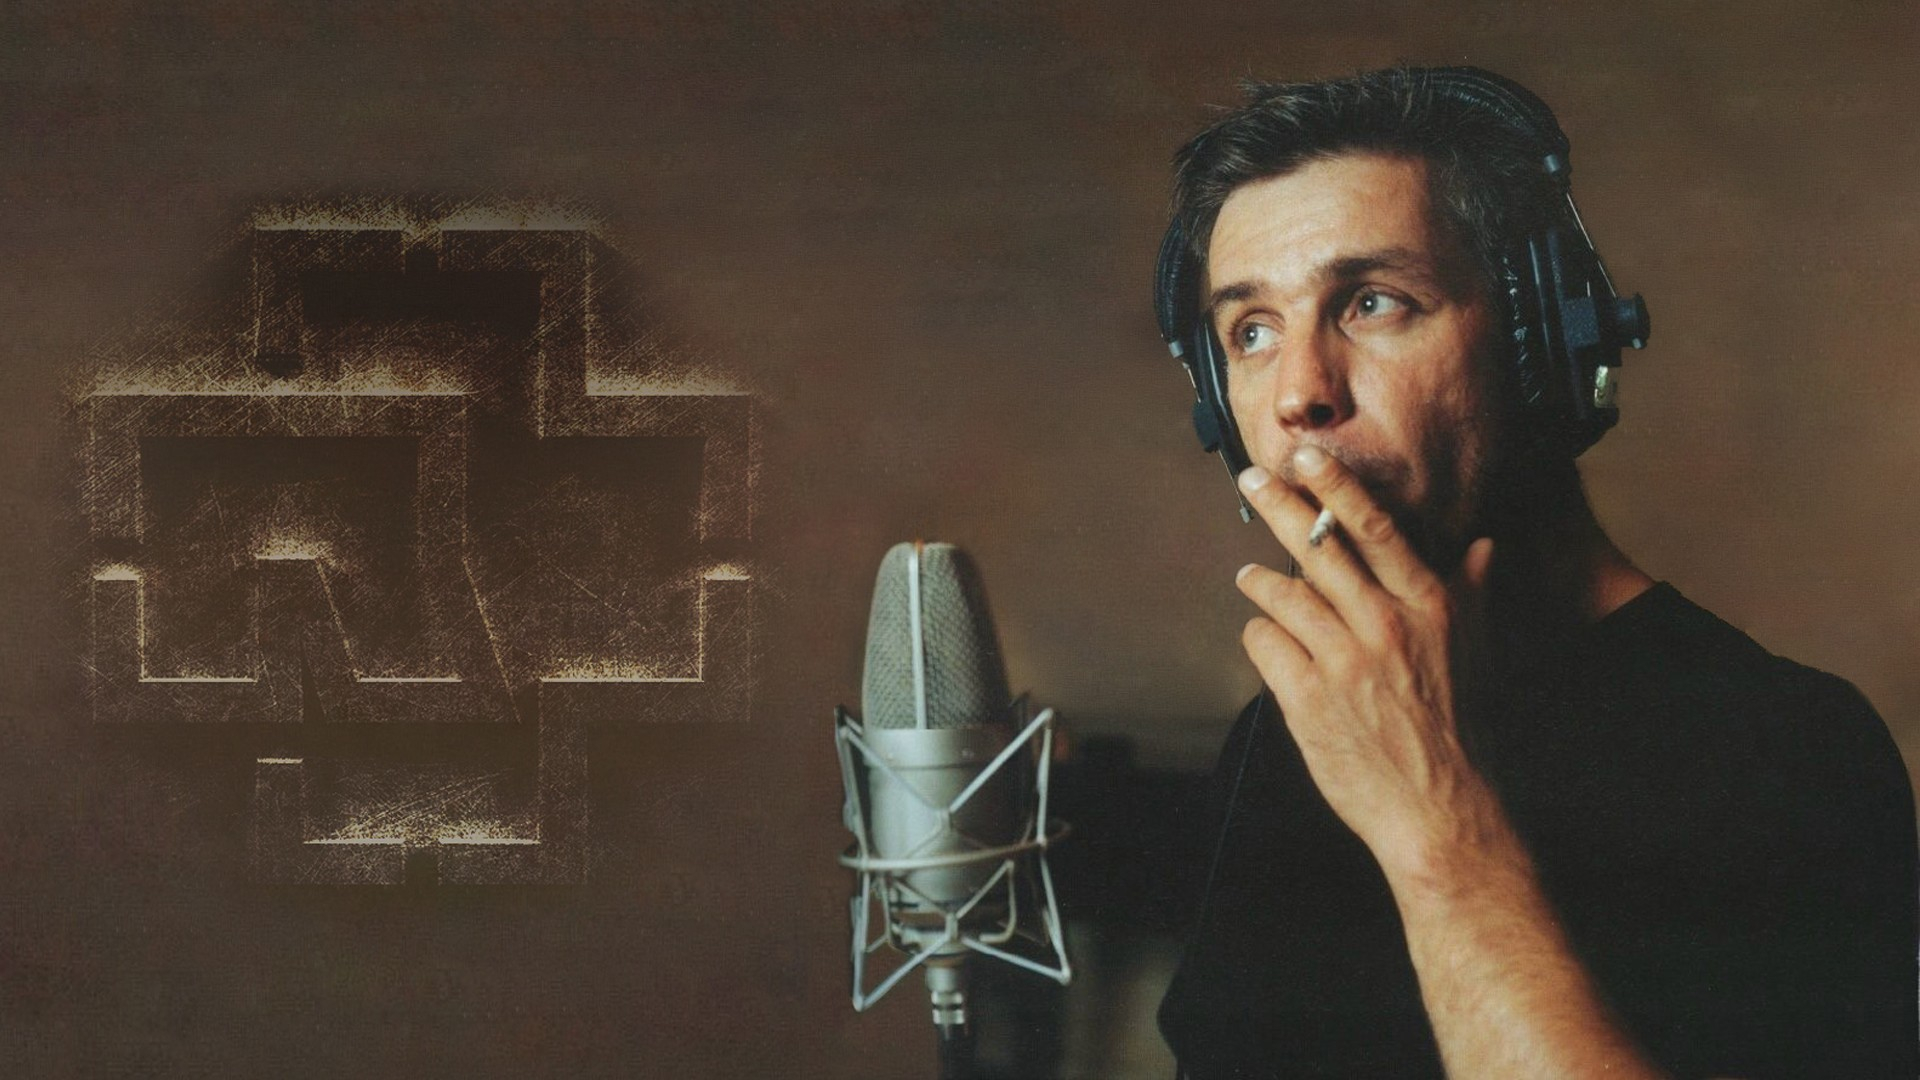 1920x1080 Wallpaper : Till Lindemann, Rammstein, singing, album cover bratomo96 194168 HD Wallpapers